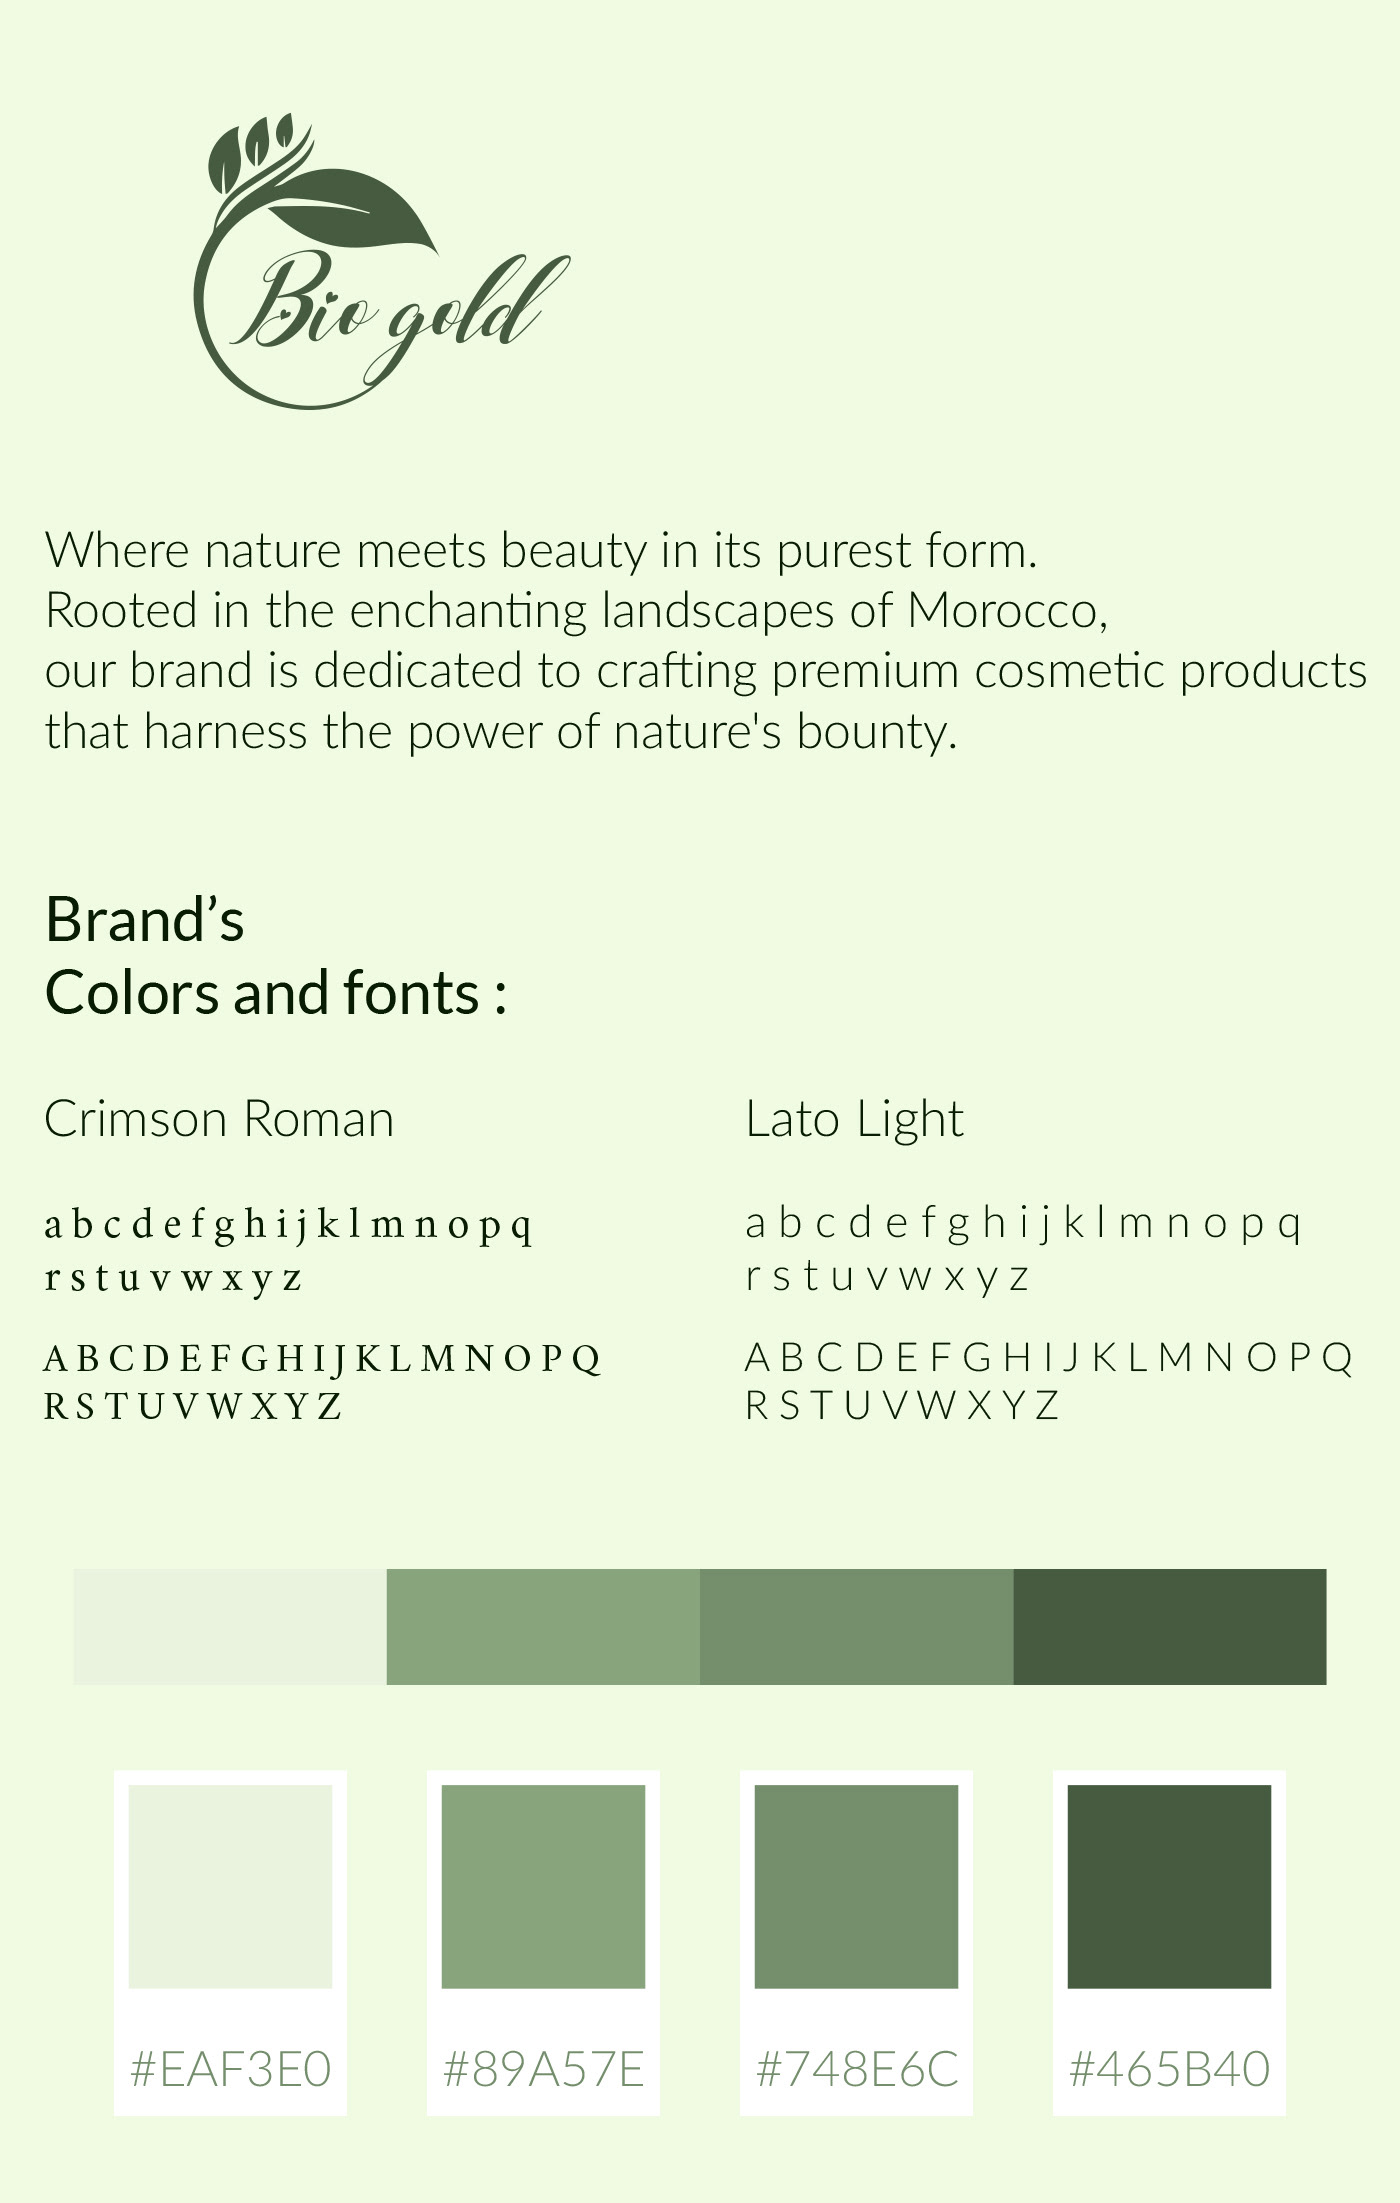 cosmetics Print Services Packaging Label beauty designer brand skincare haircare servicio de impresion